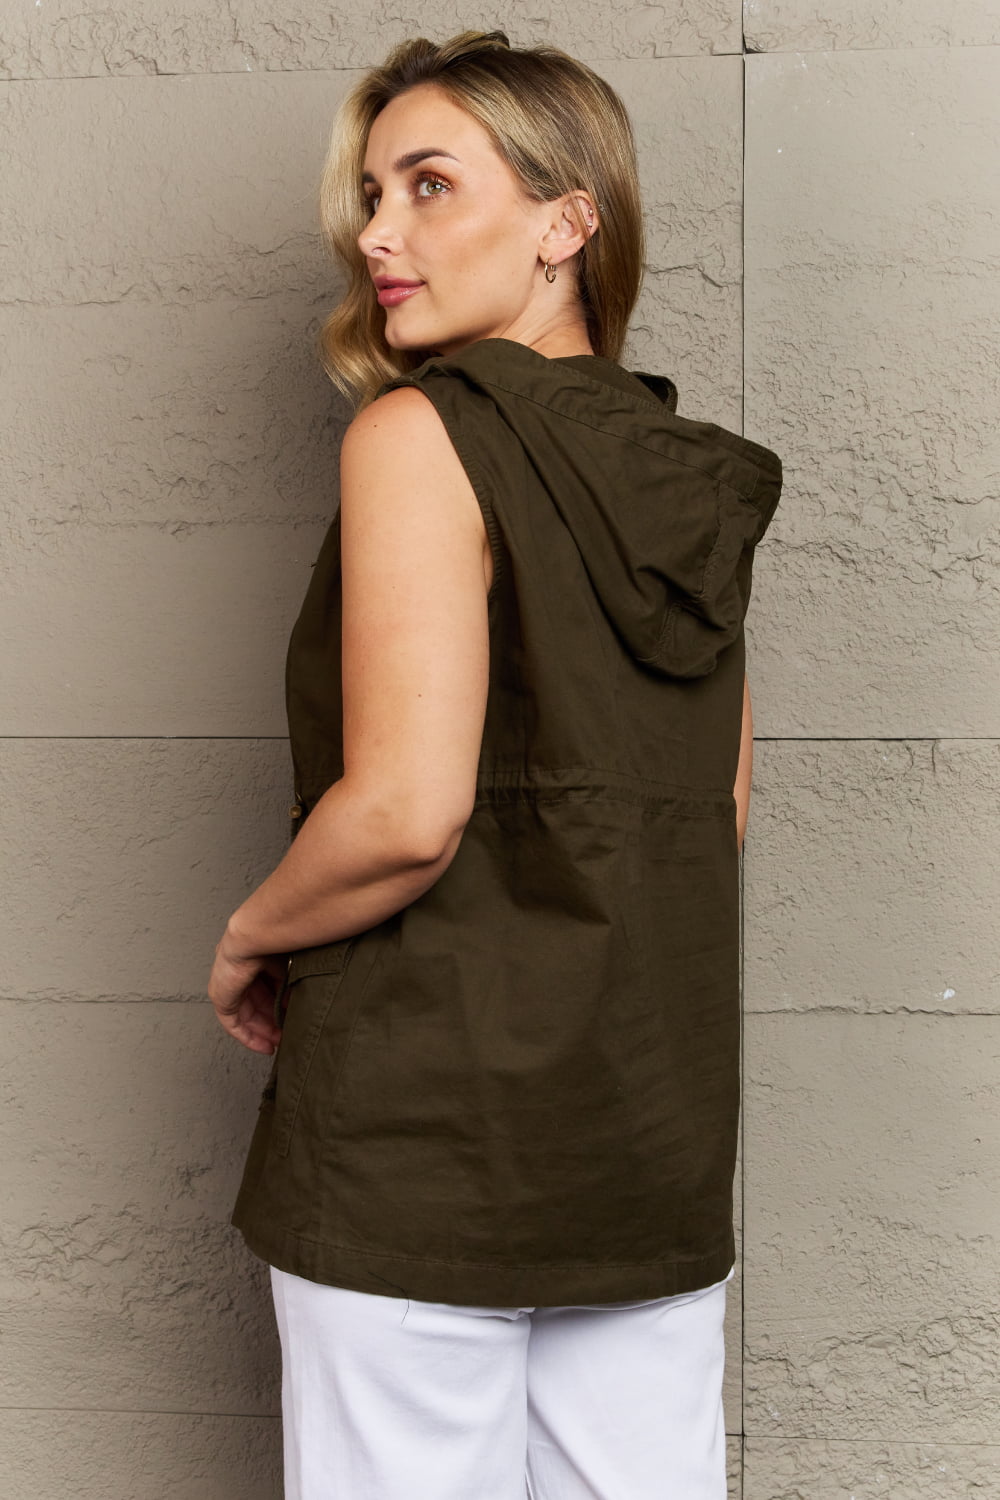 Zenana More To Come Full Size Military Hooded Vest - pvmark